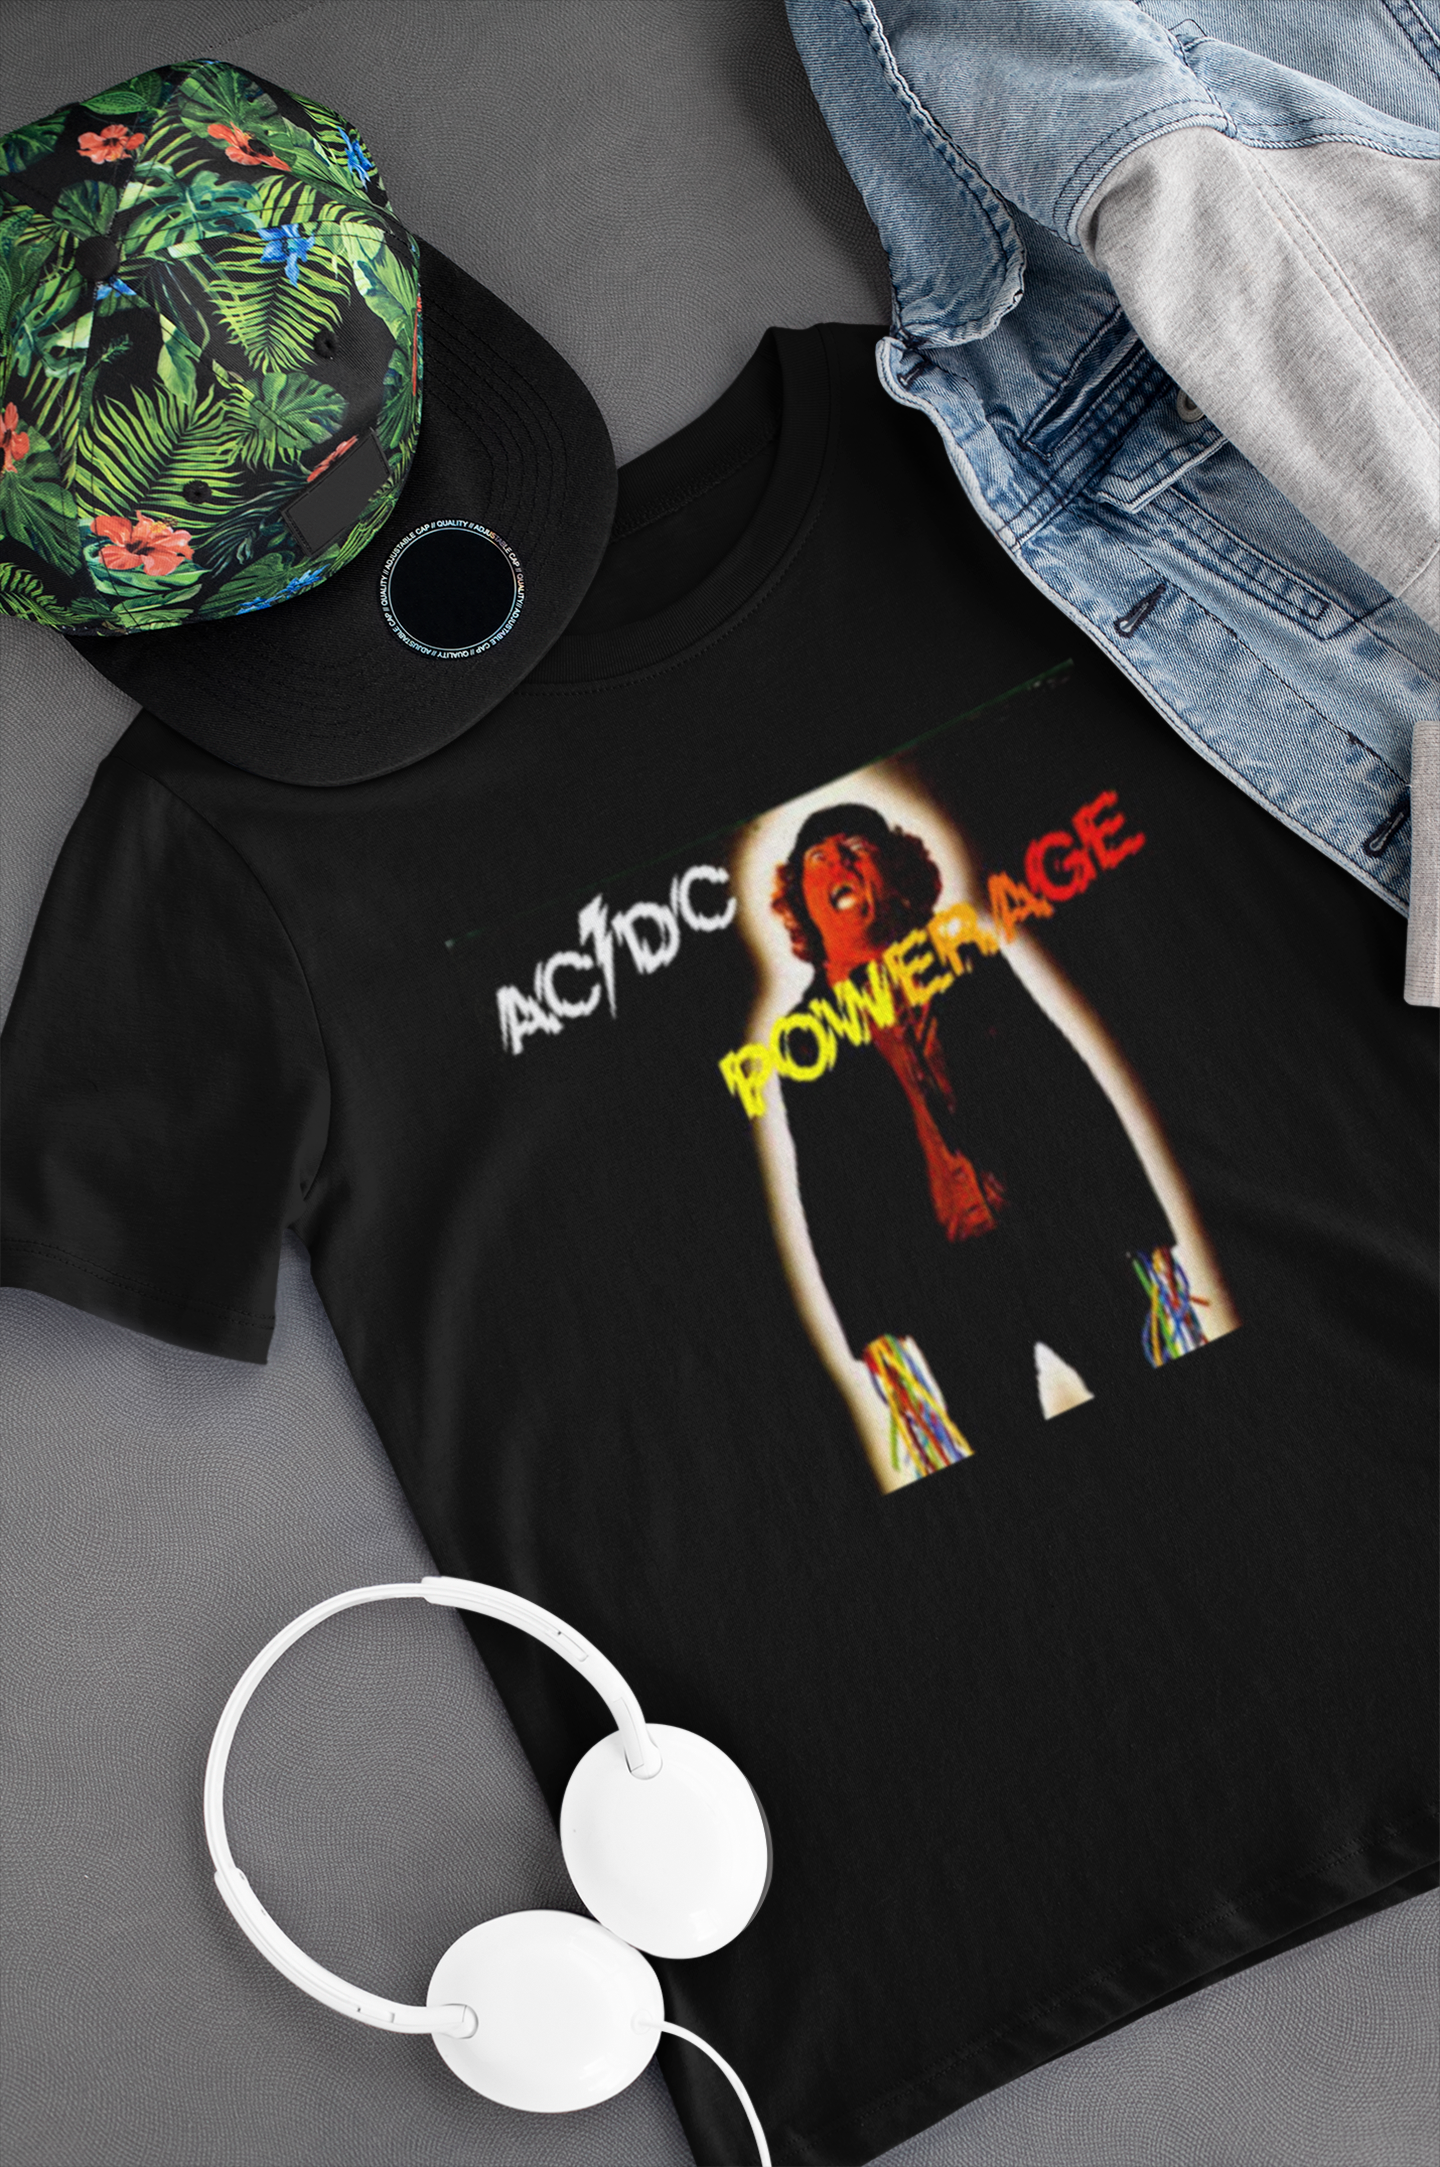 Camiseta "Powerage - ACDC" - Álbum - Música